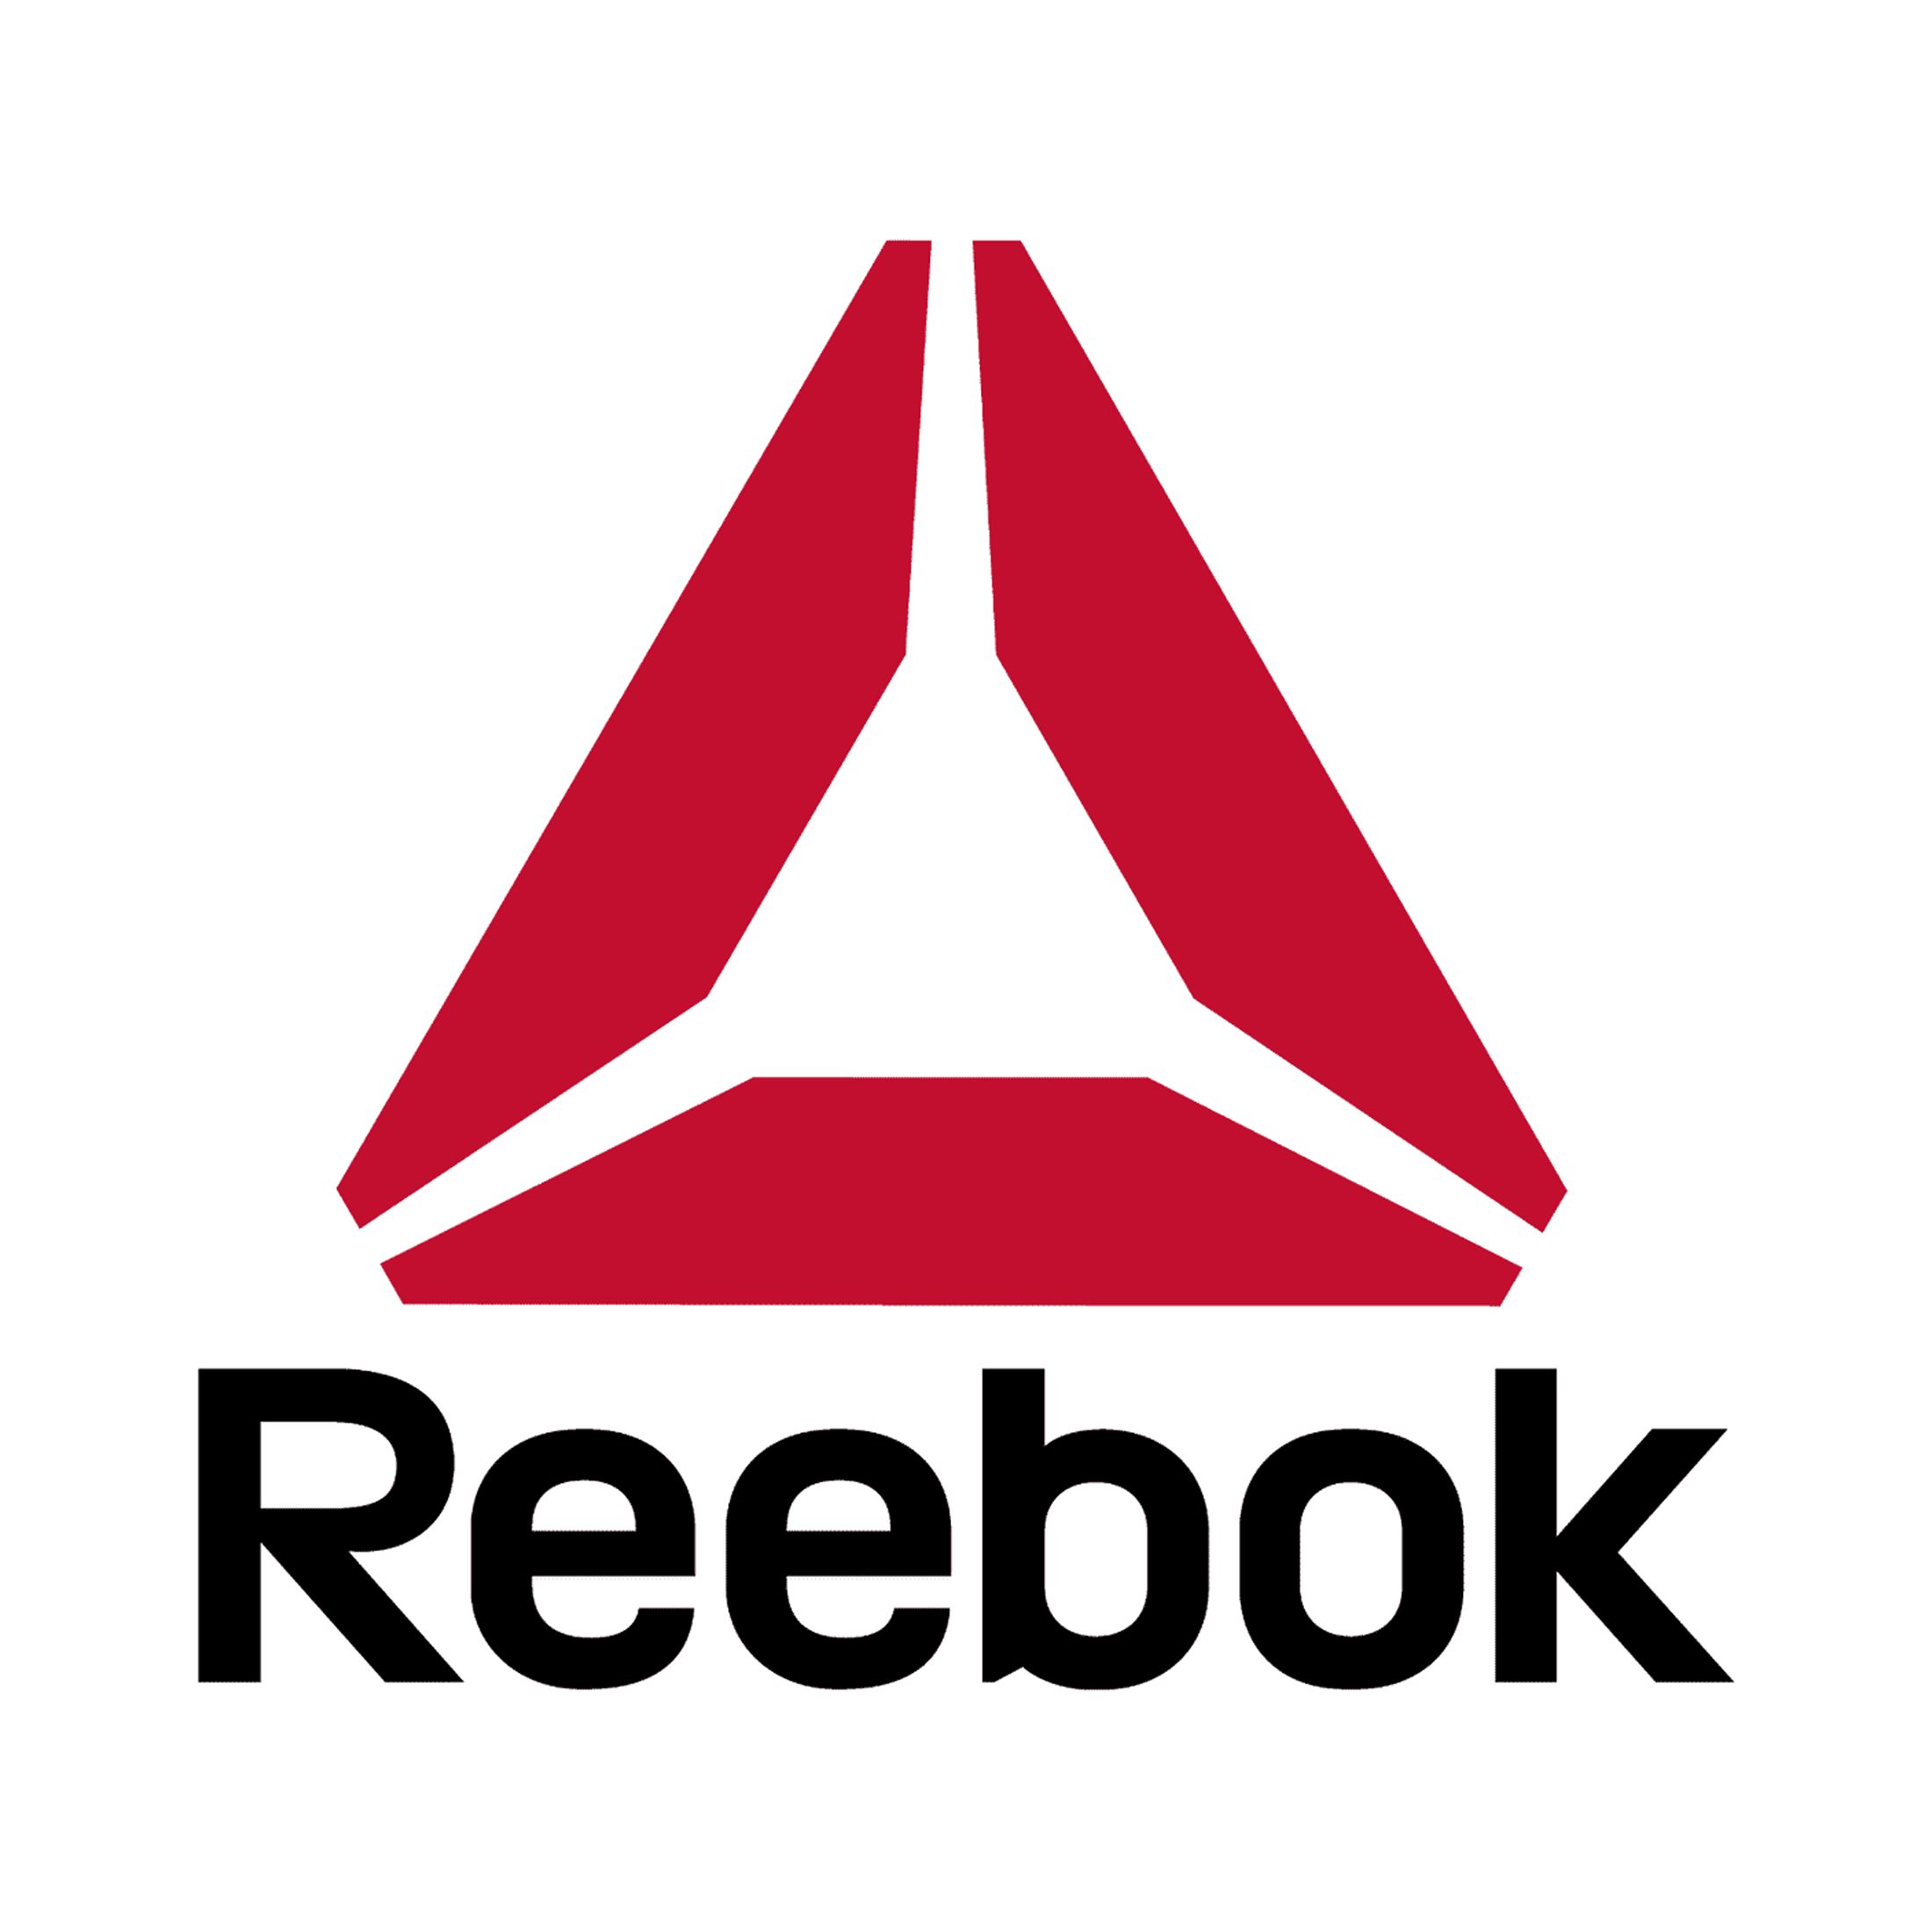 Reebok Boys Underwear, Performance Boxer Briefs, 5-Pack - image 4 of 4